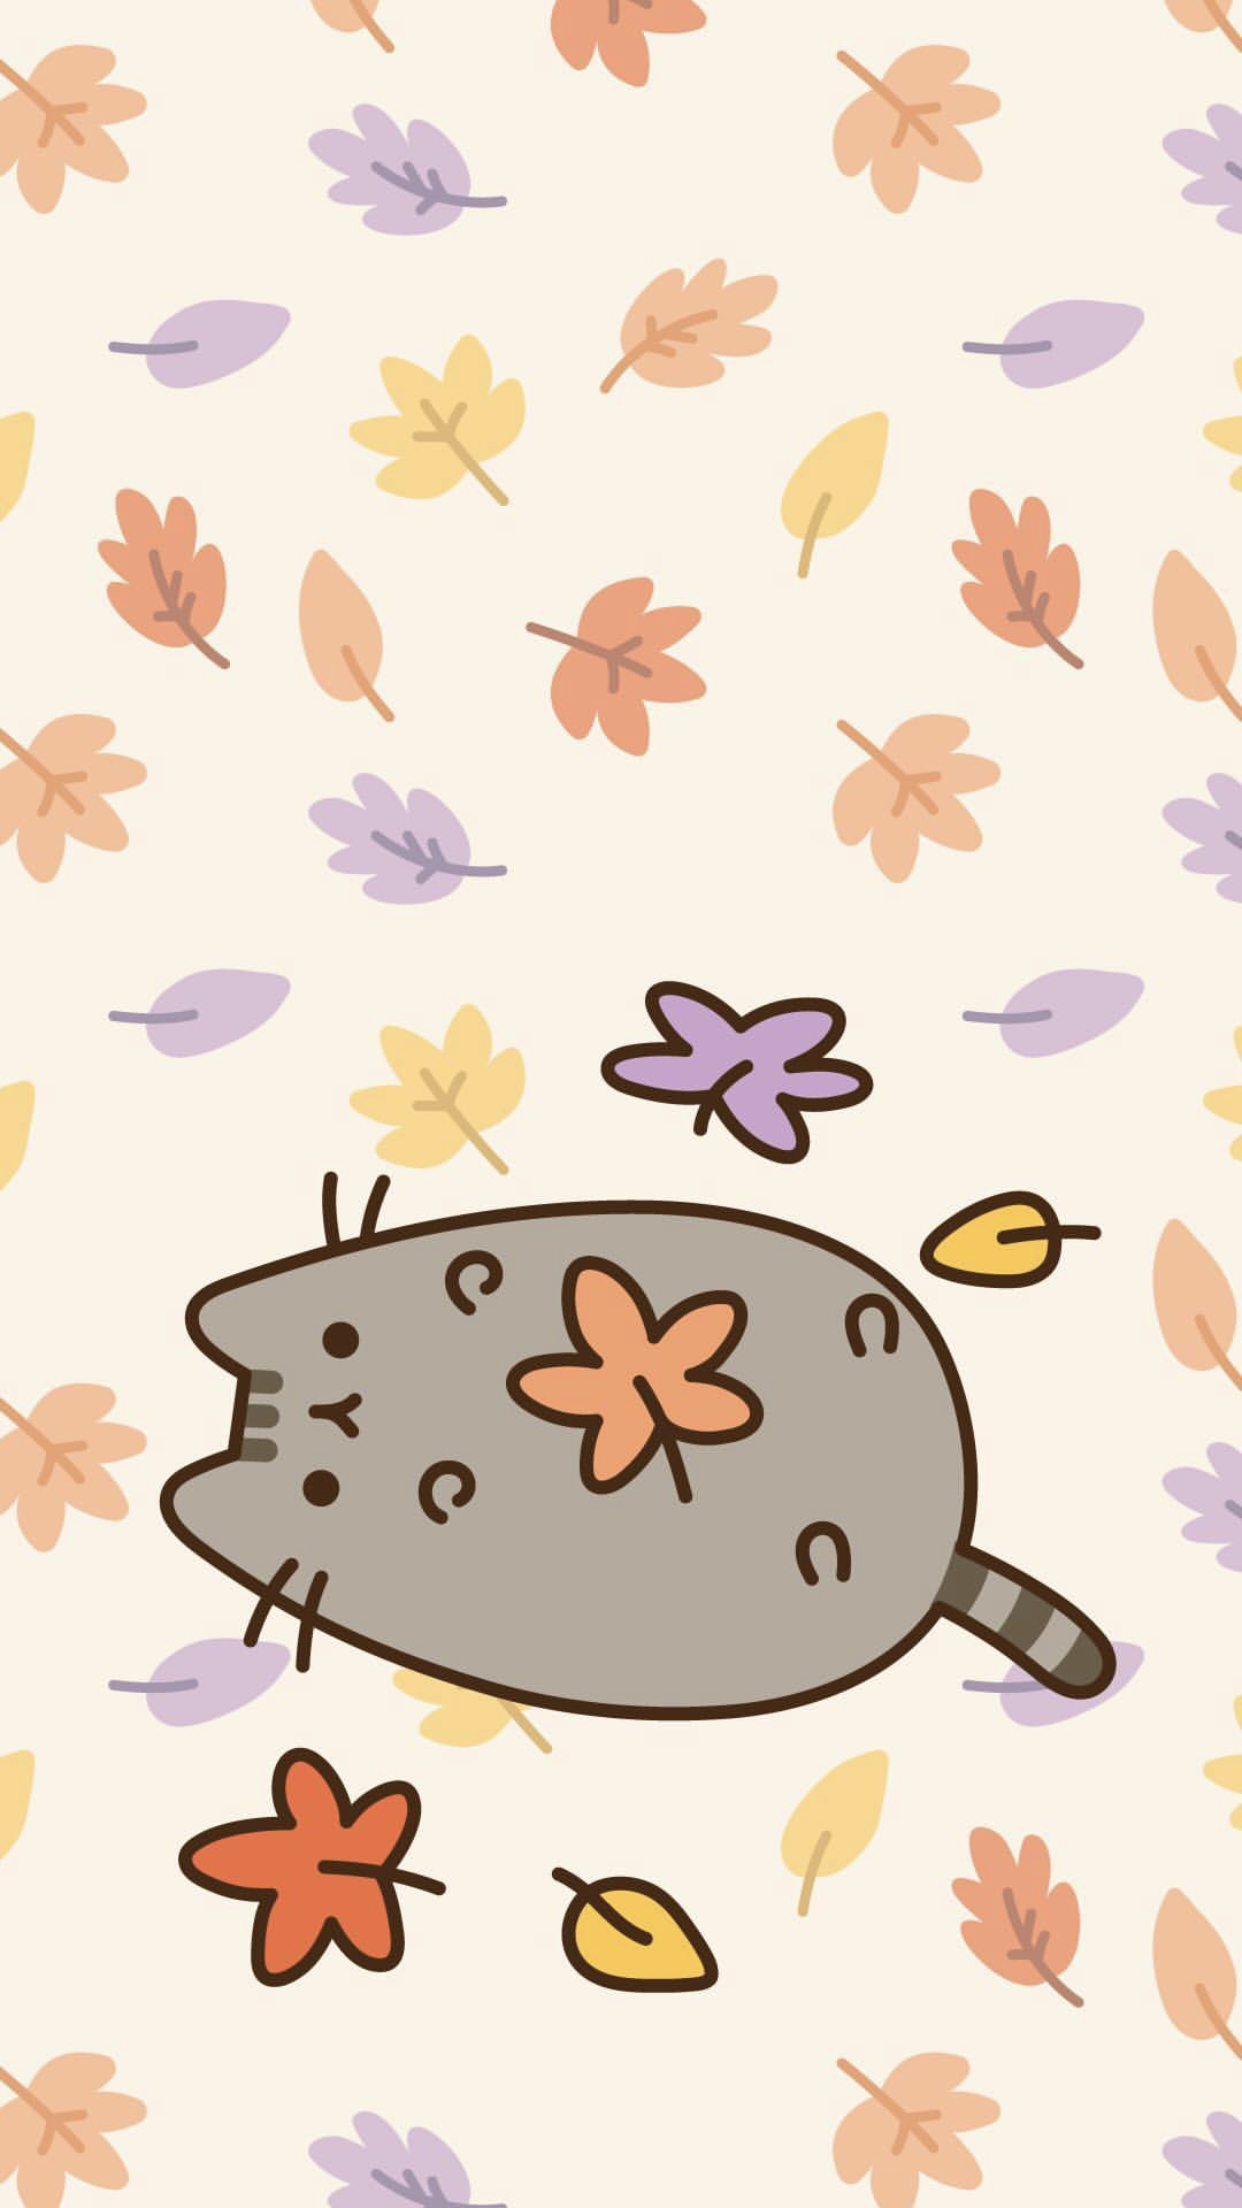 pusheen the cat iphone wallpaper. Pusheen cute, Fall wallpaper, Cat wallpaper